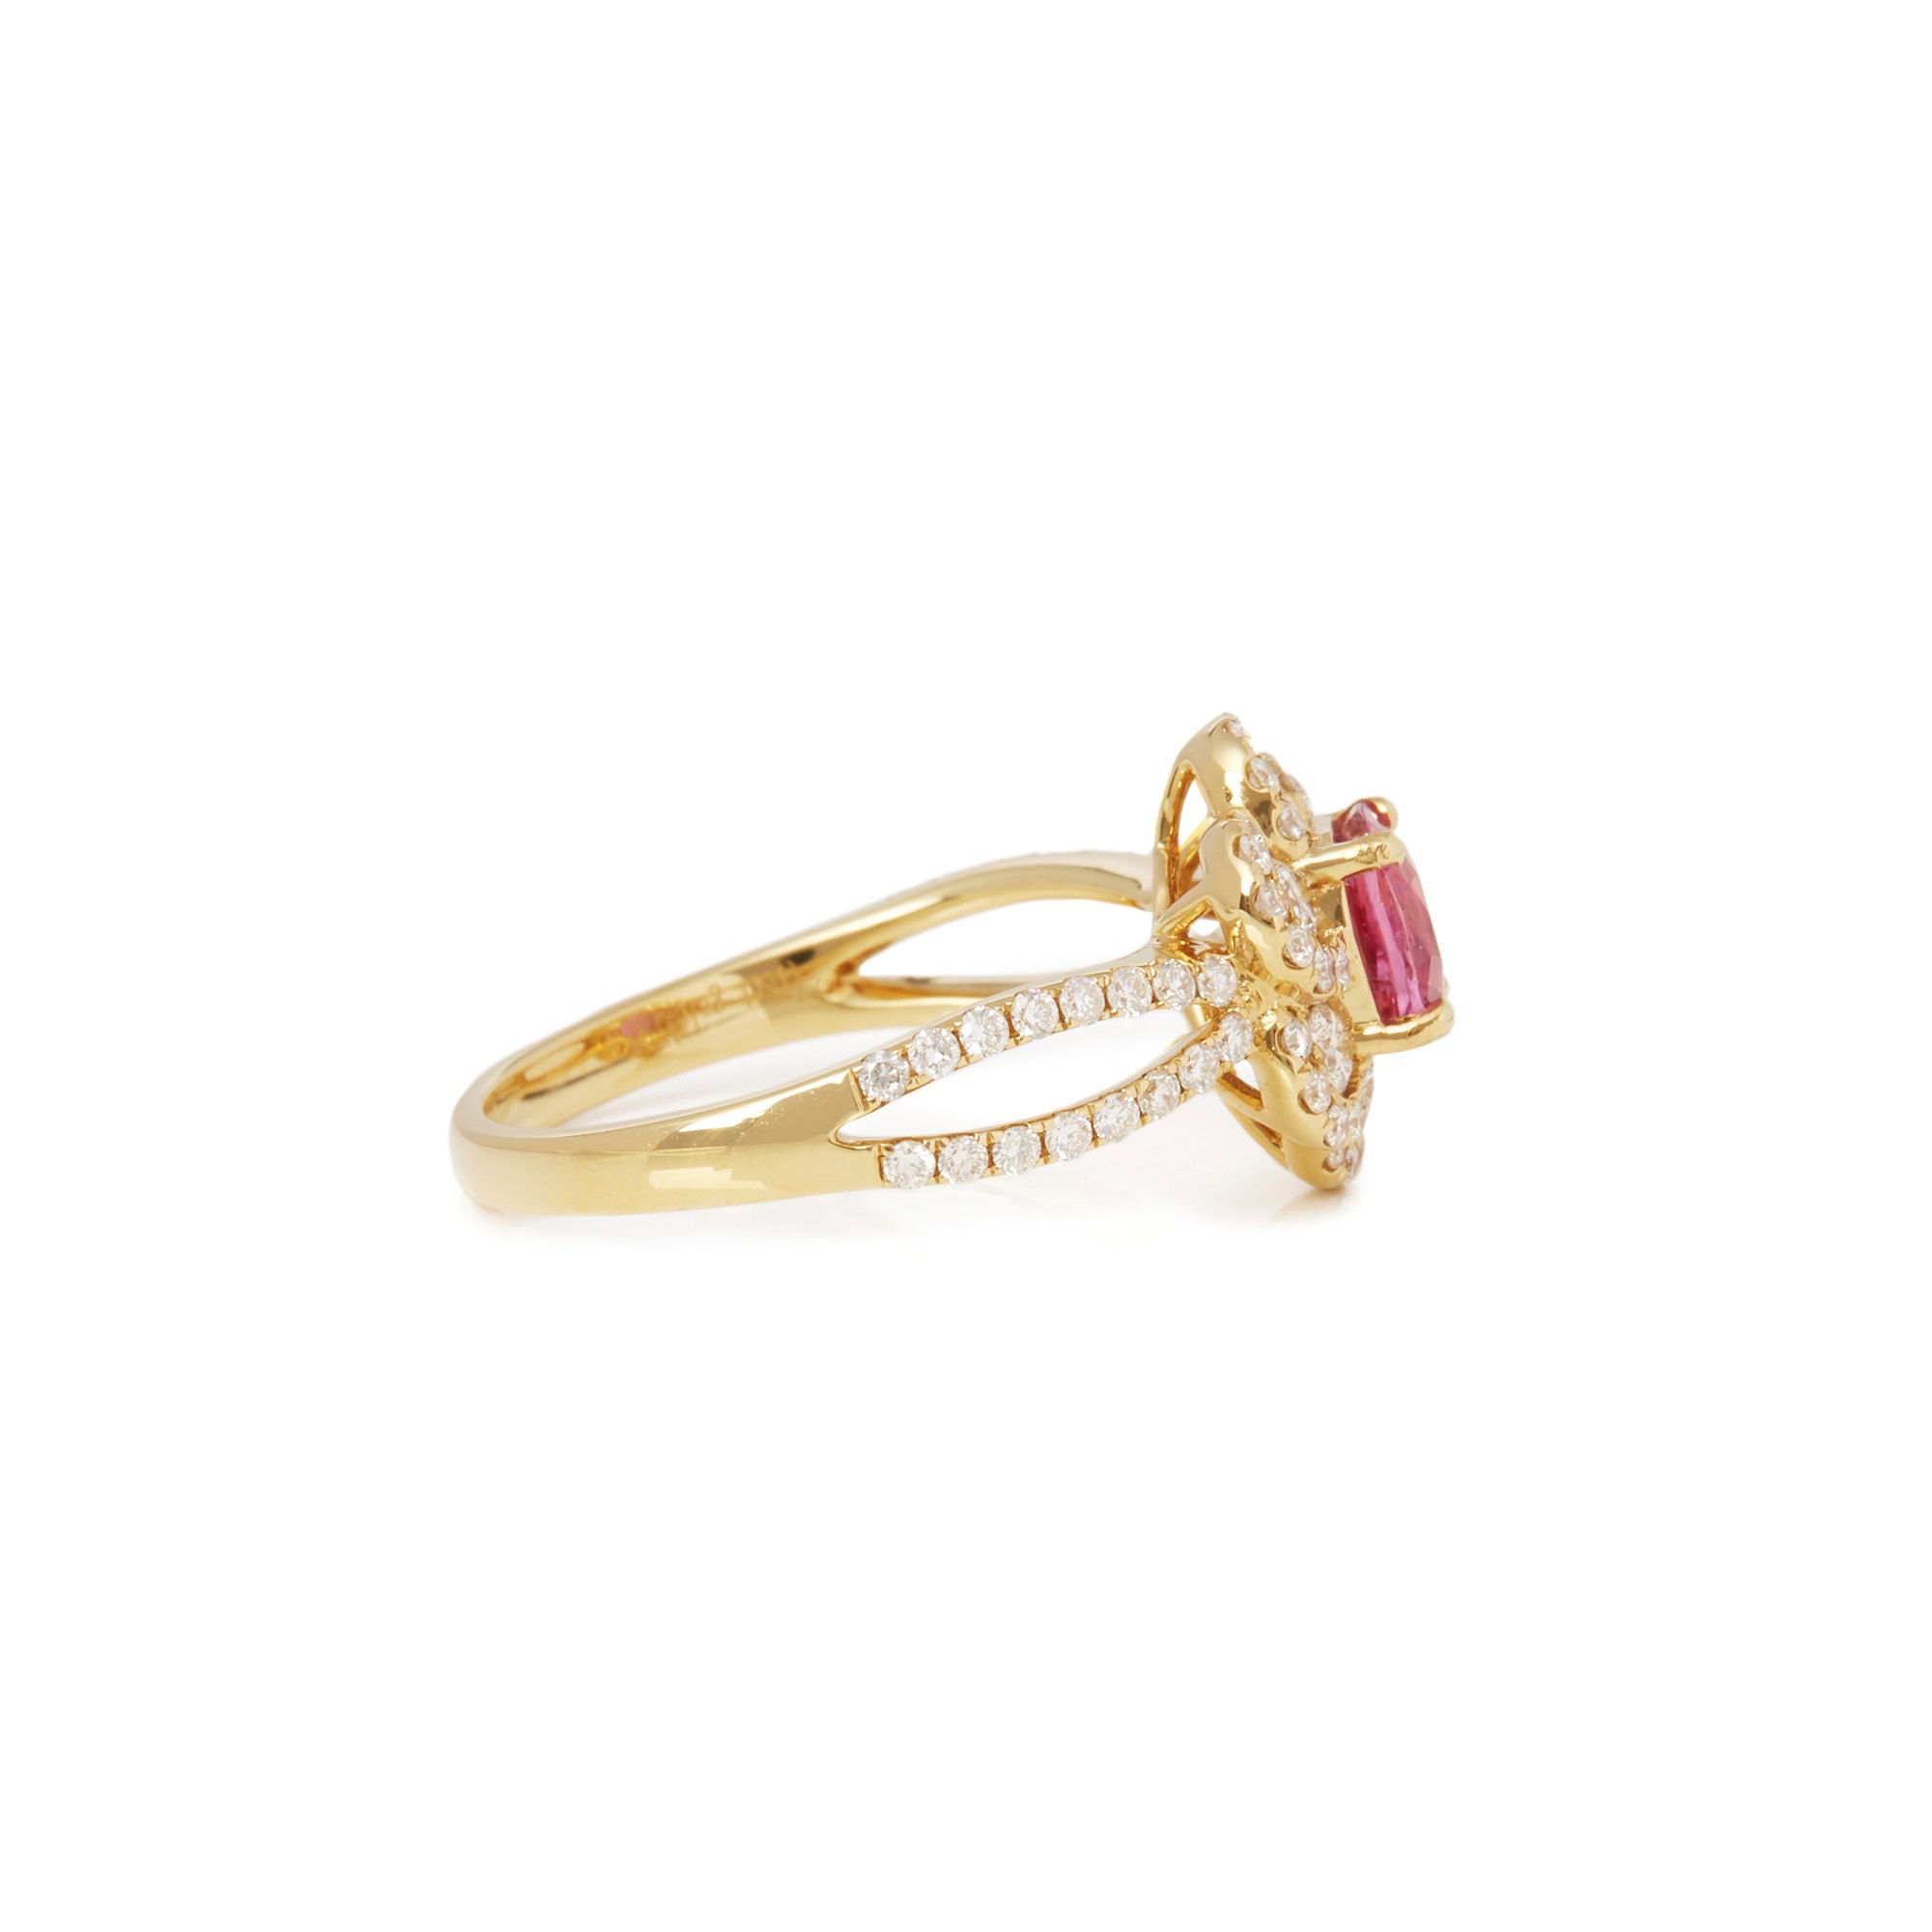 David Jerome 18k Yellow Gold Pink Sapphire and Diamond Ring